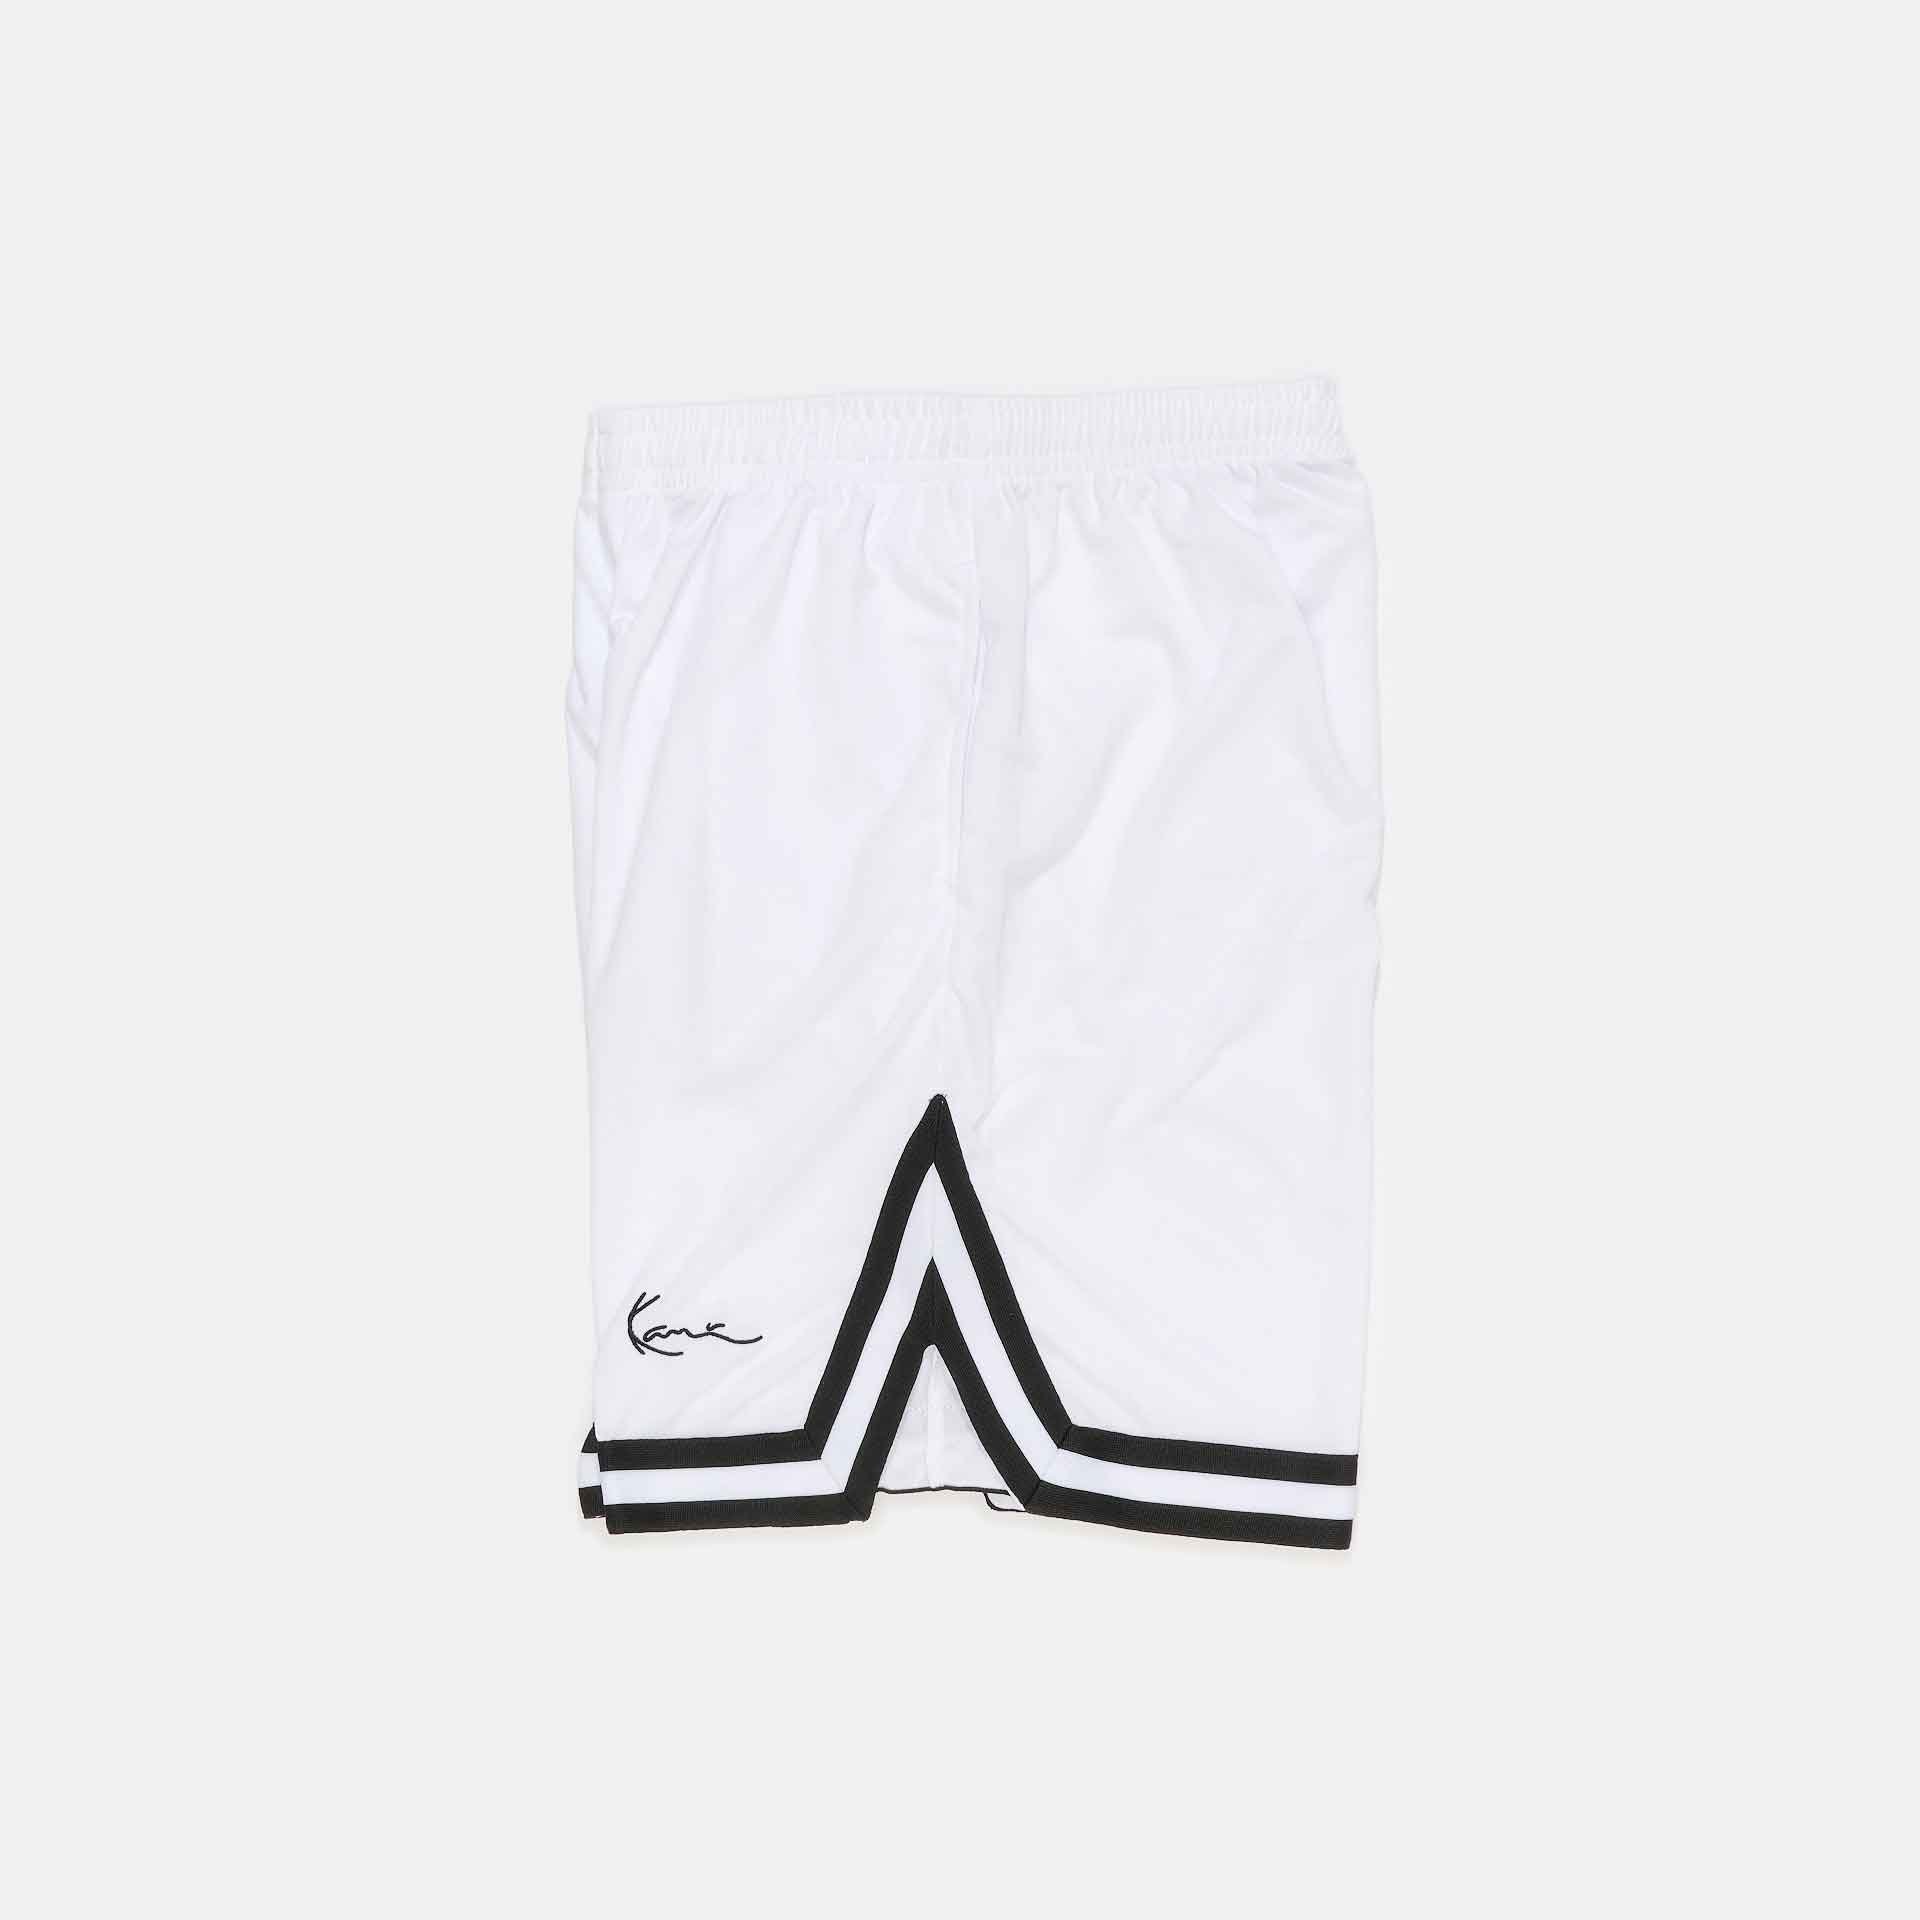 Karl Kani Signature Mesh Shorts White/Black